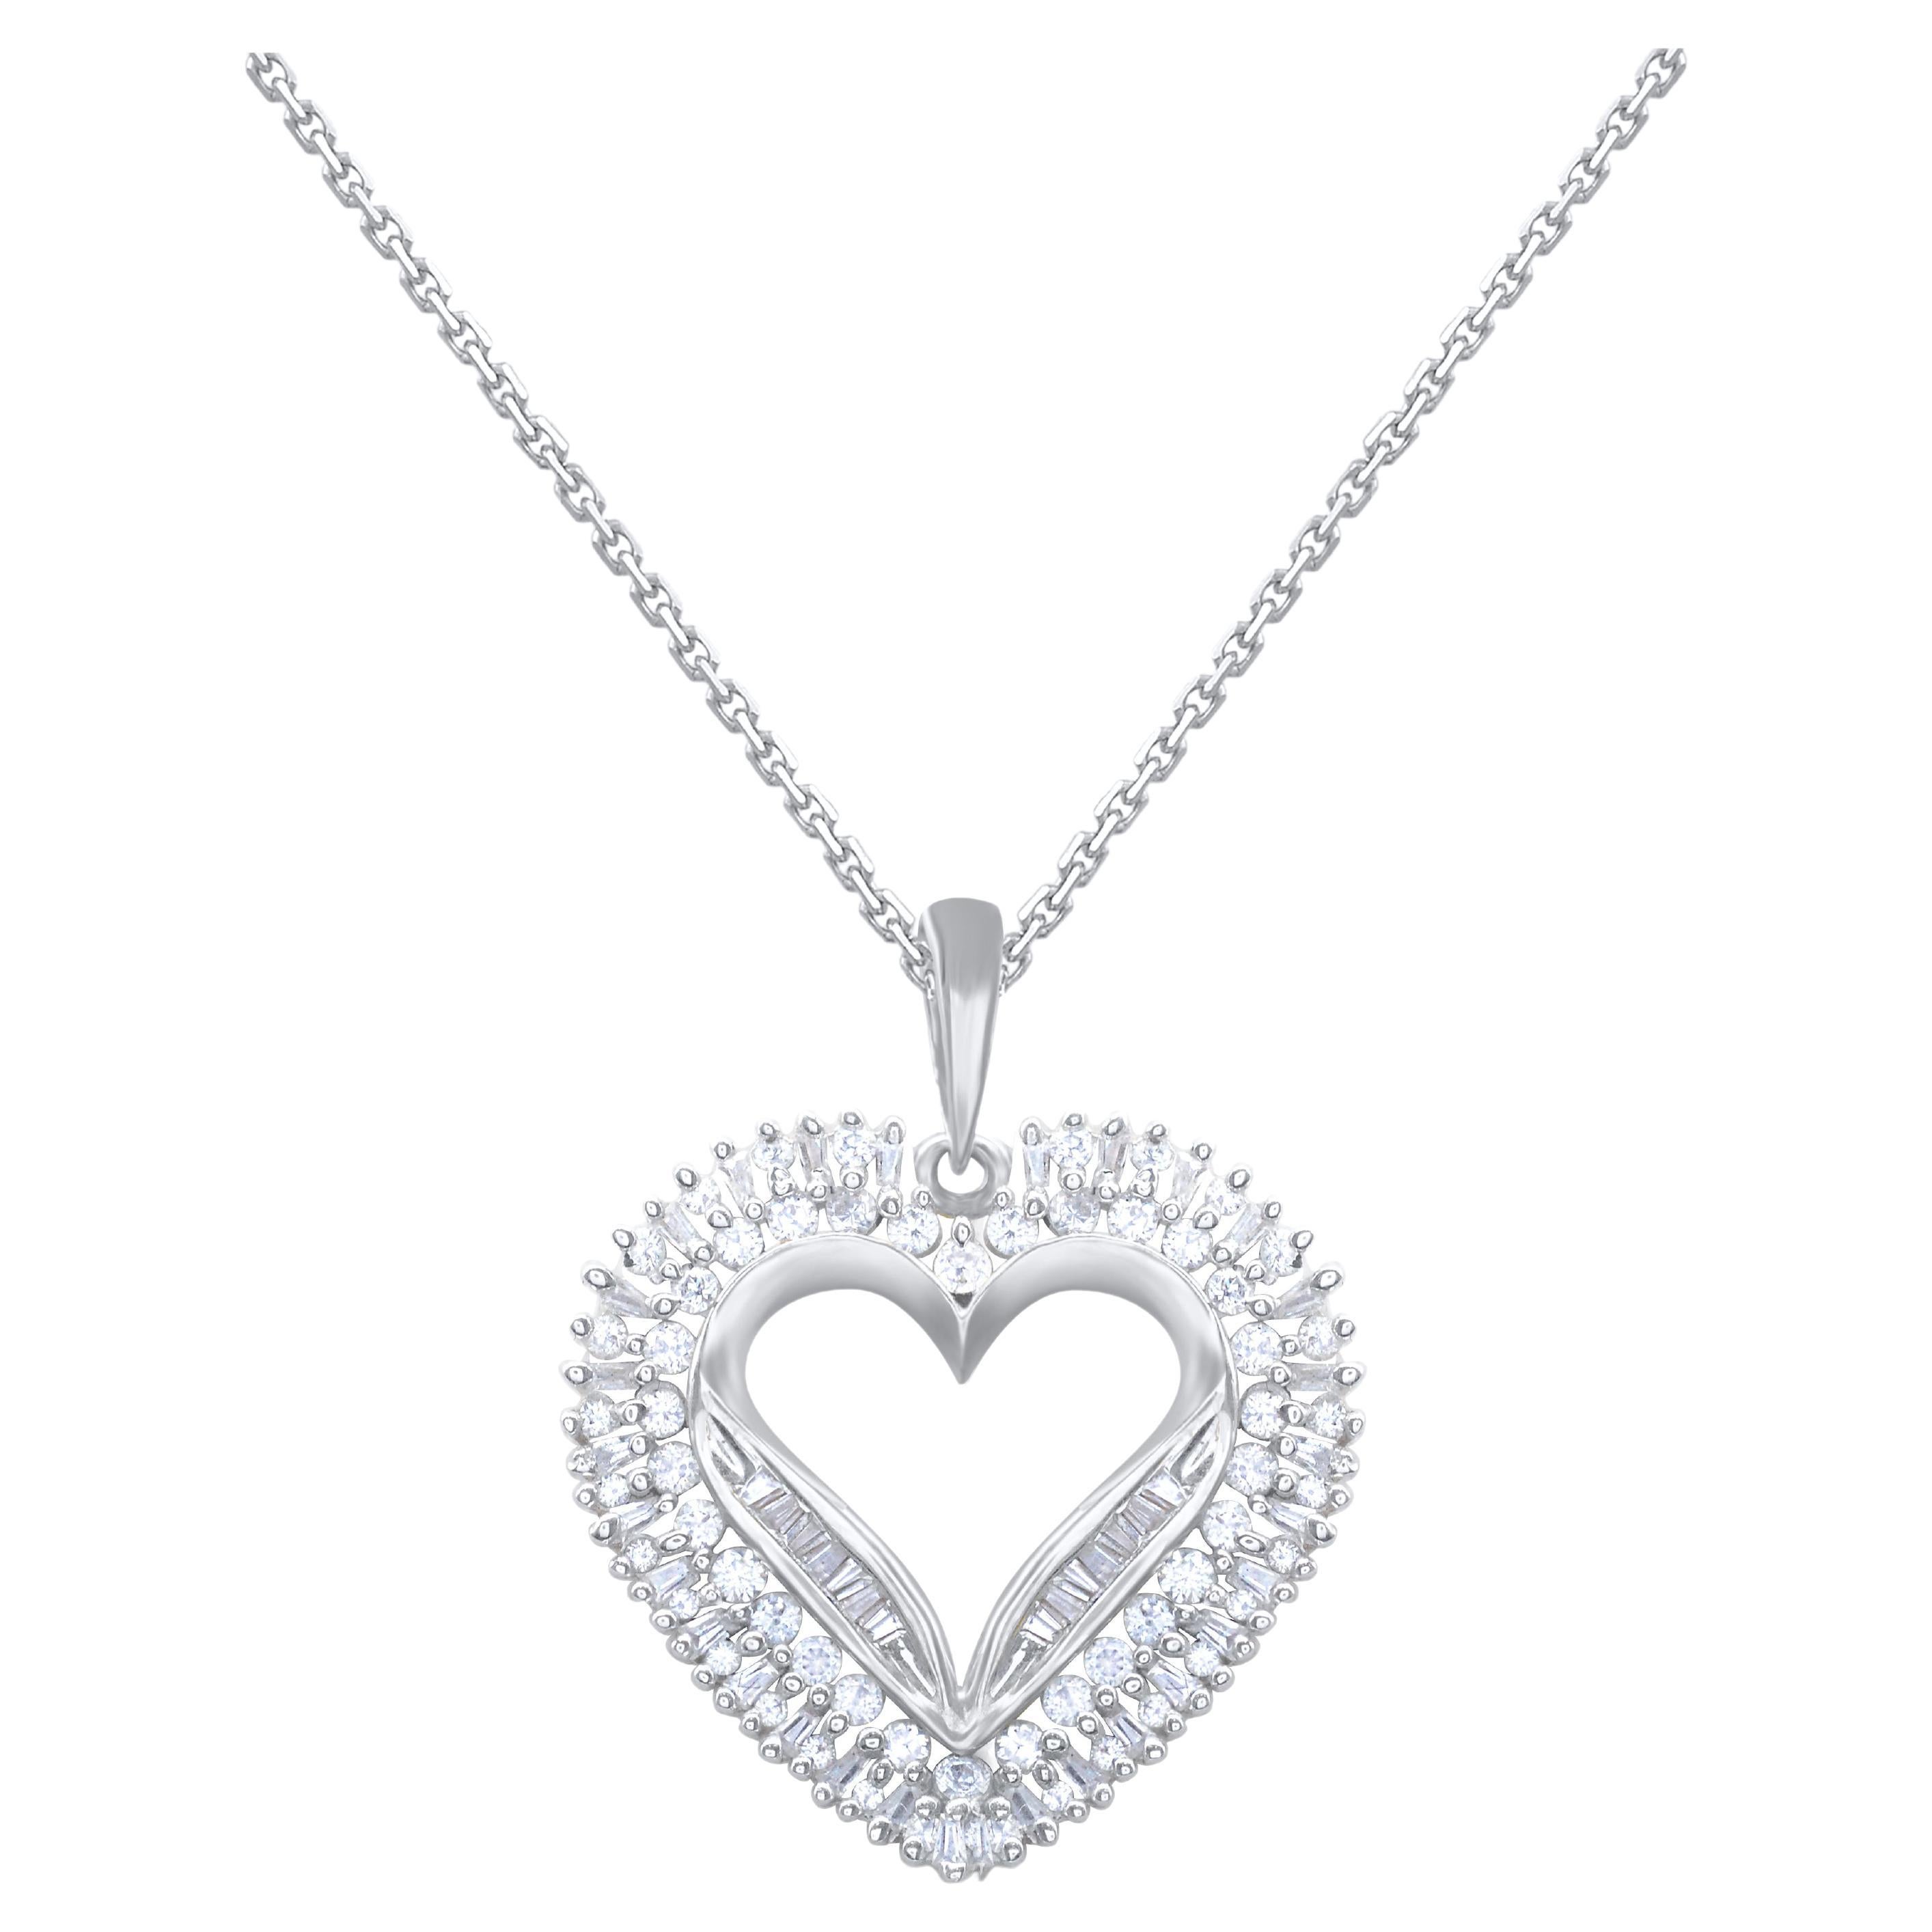 TJD 1.0 Carat Round & Baguette Diamond 14KT White Gold Heart Pendant Necklace